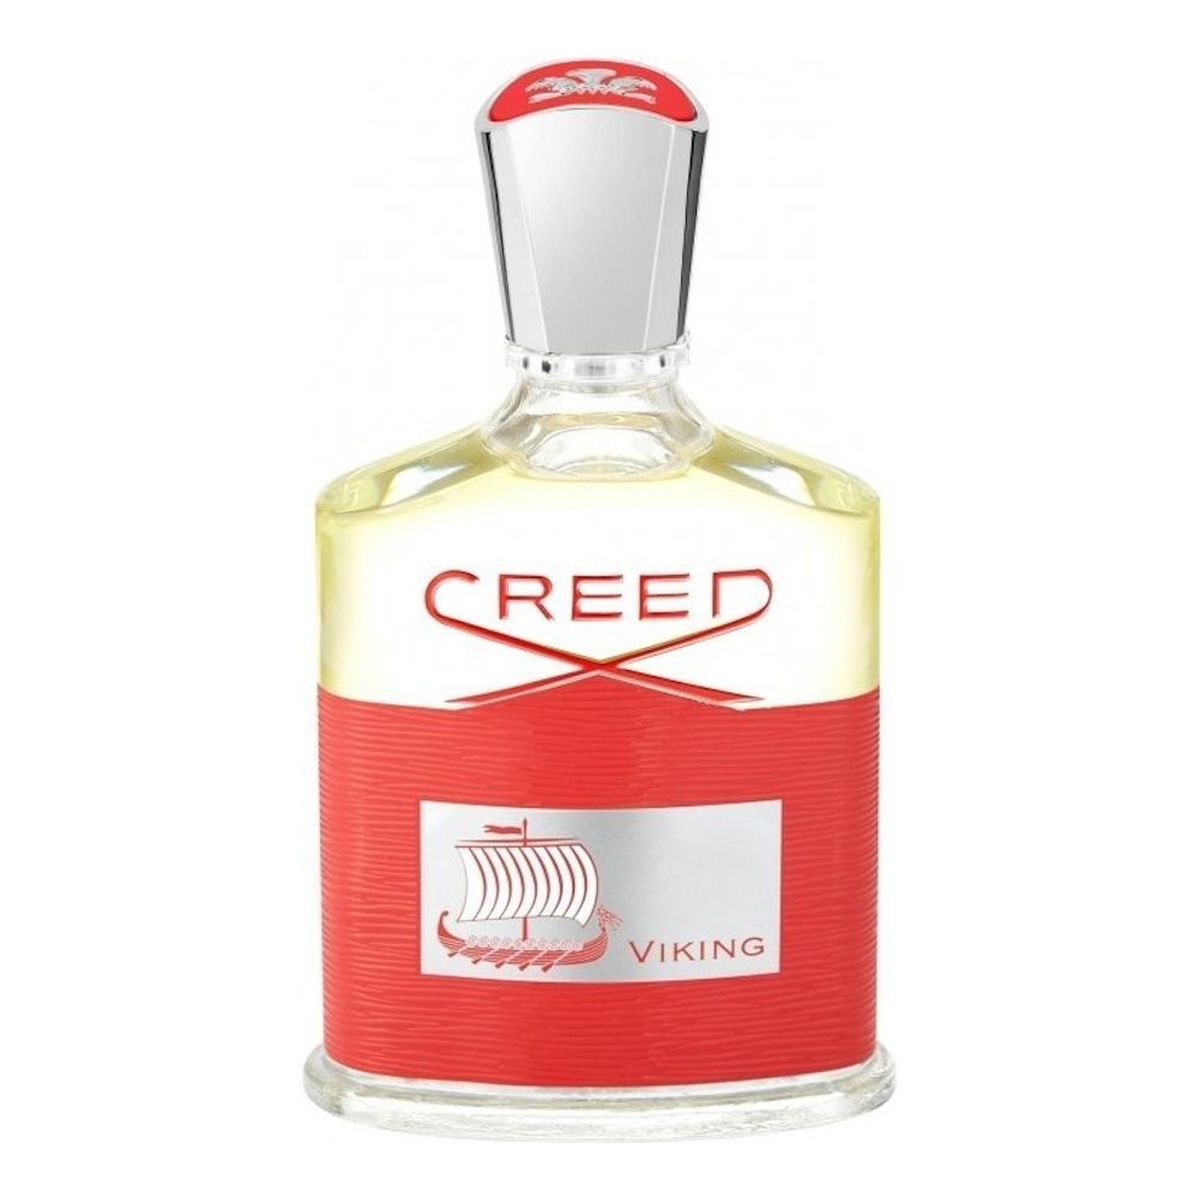 Creed Viking Woda perfumowana spraytester 100ml